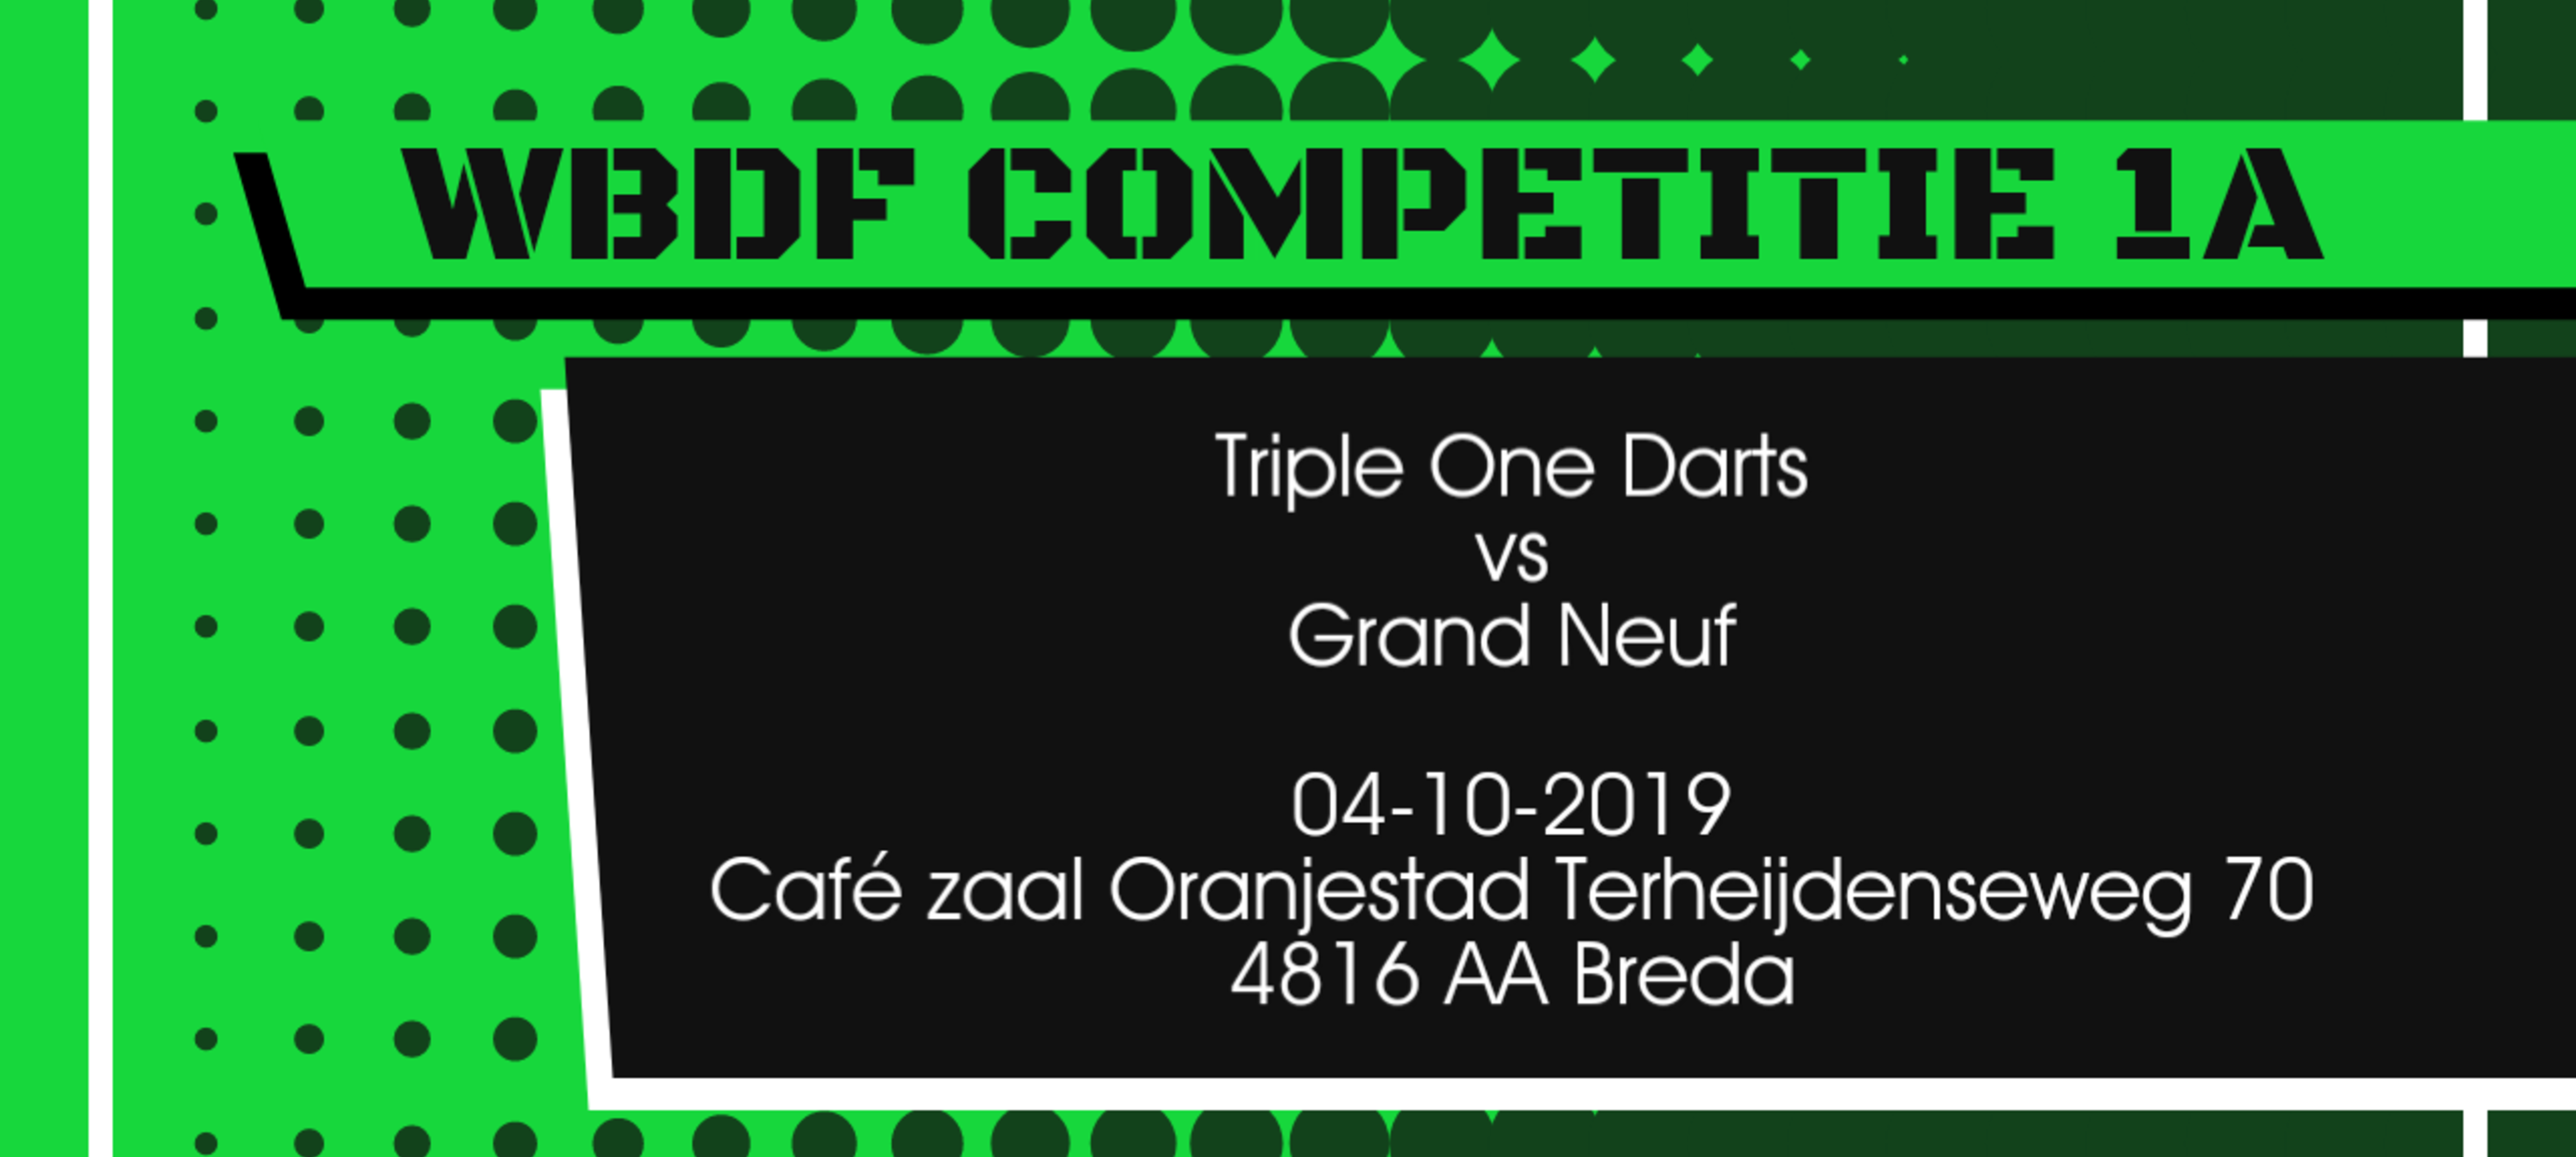 Team Triple One Darts vs Grand Neuf